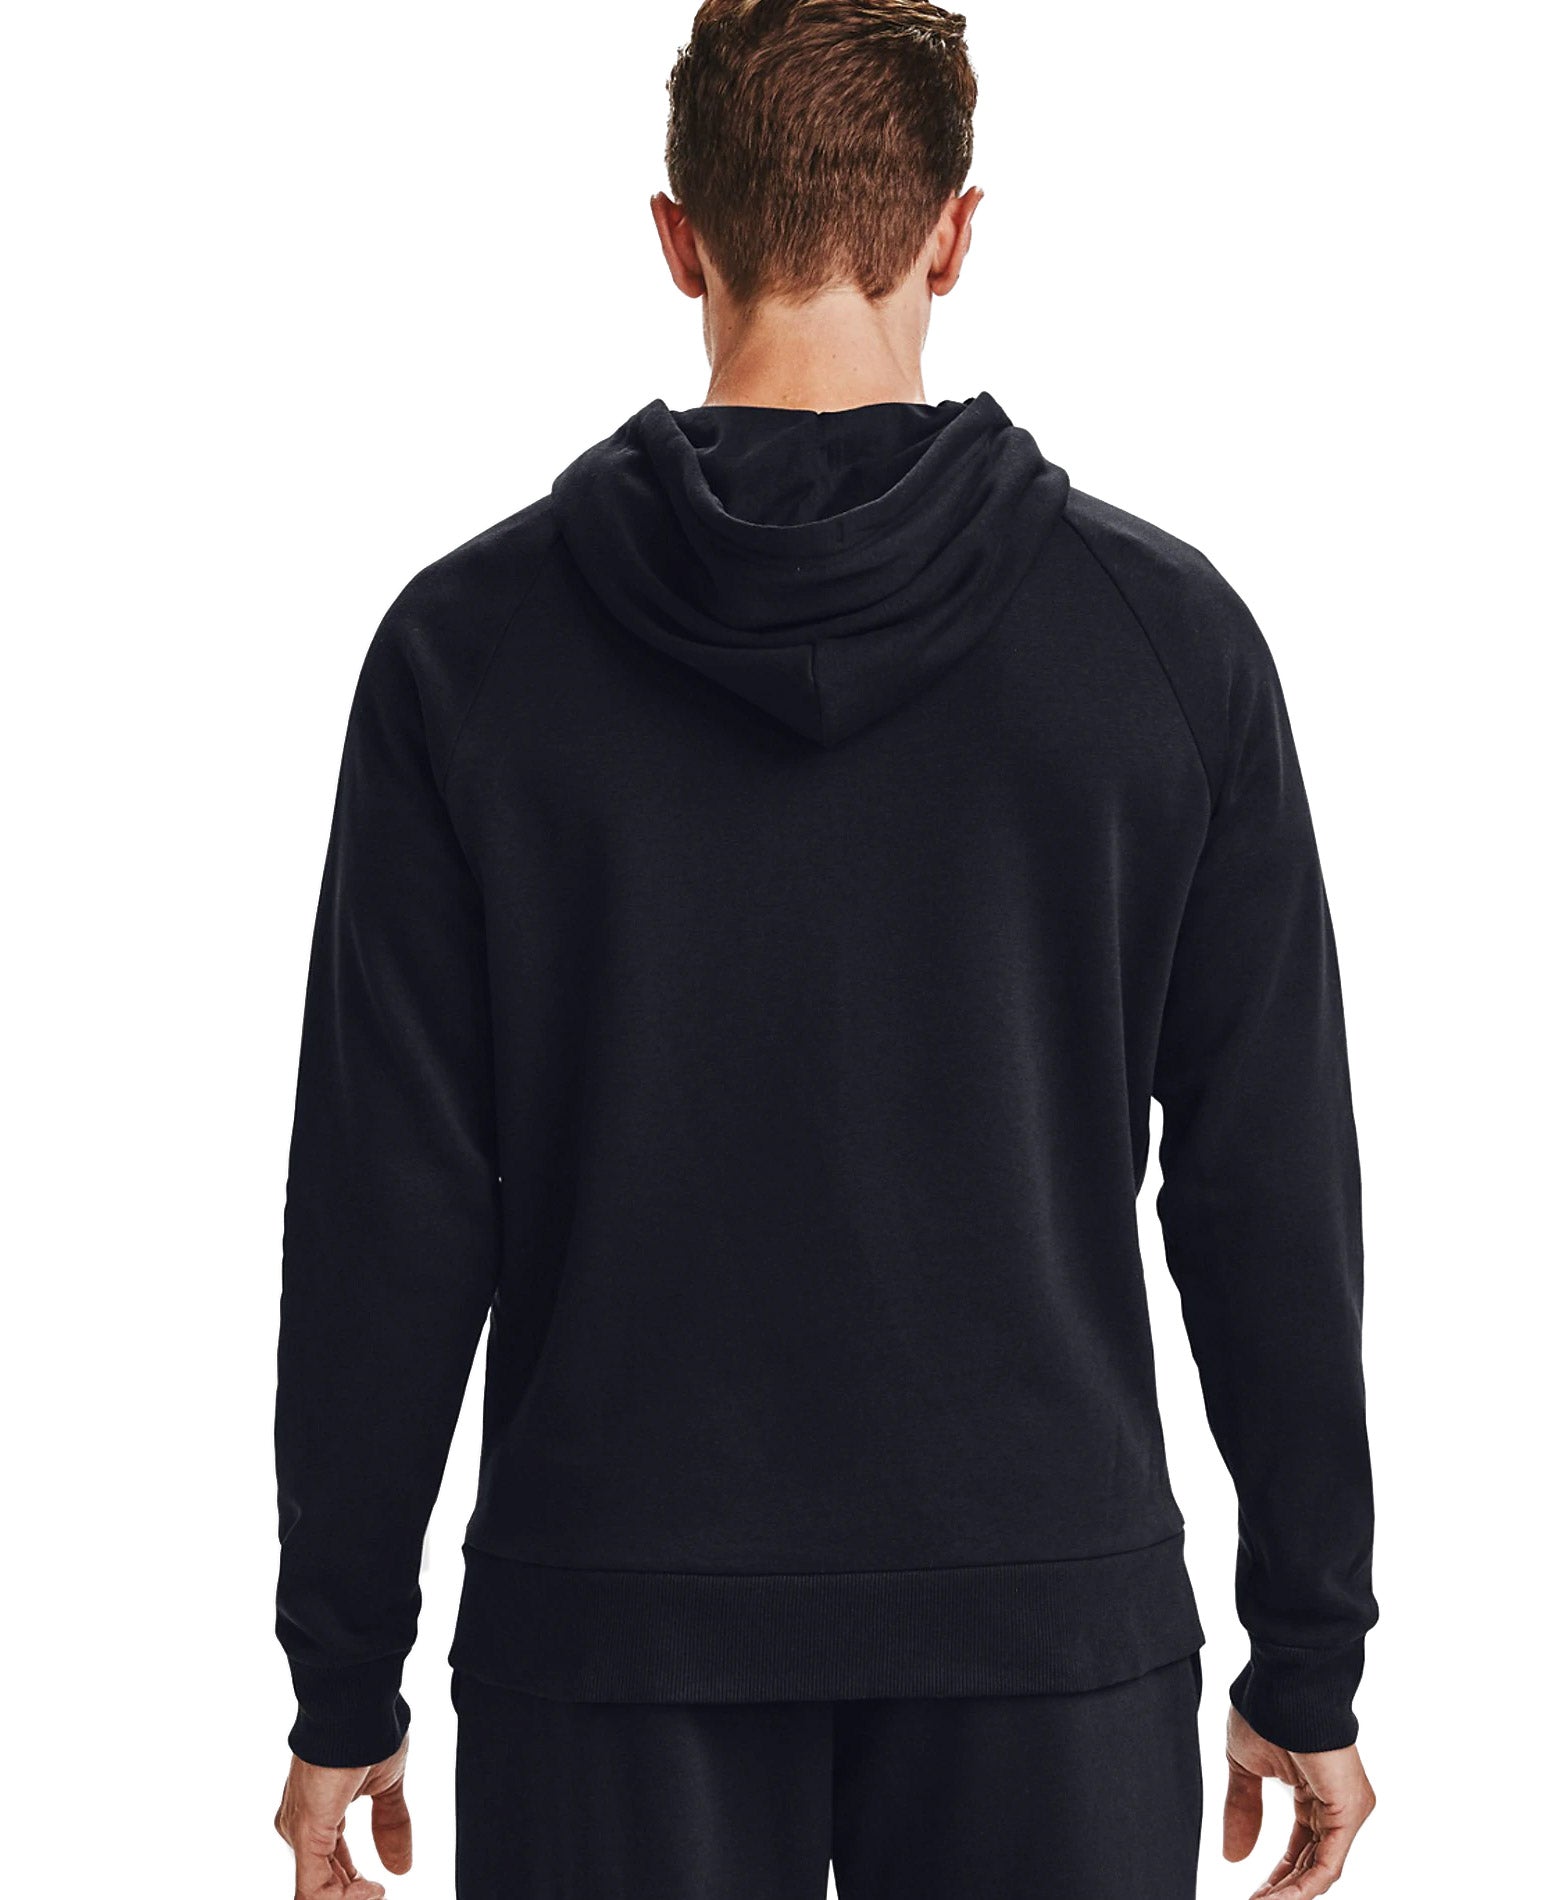 Rival fleece fz hoodie for men - black